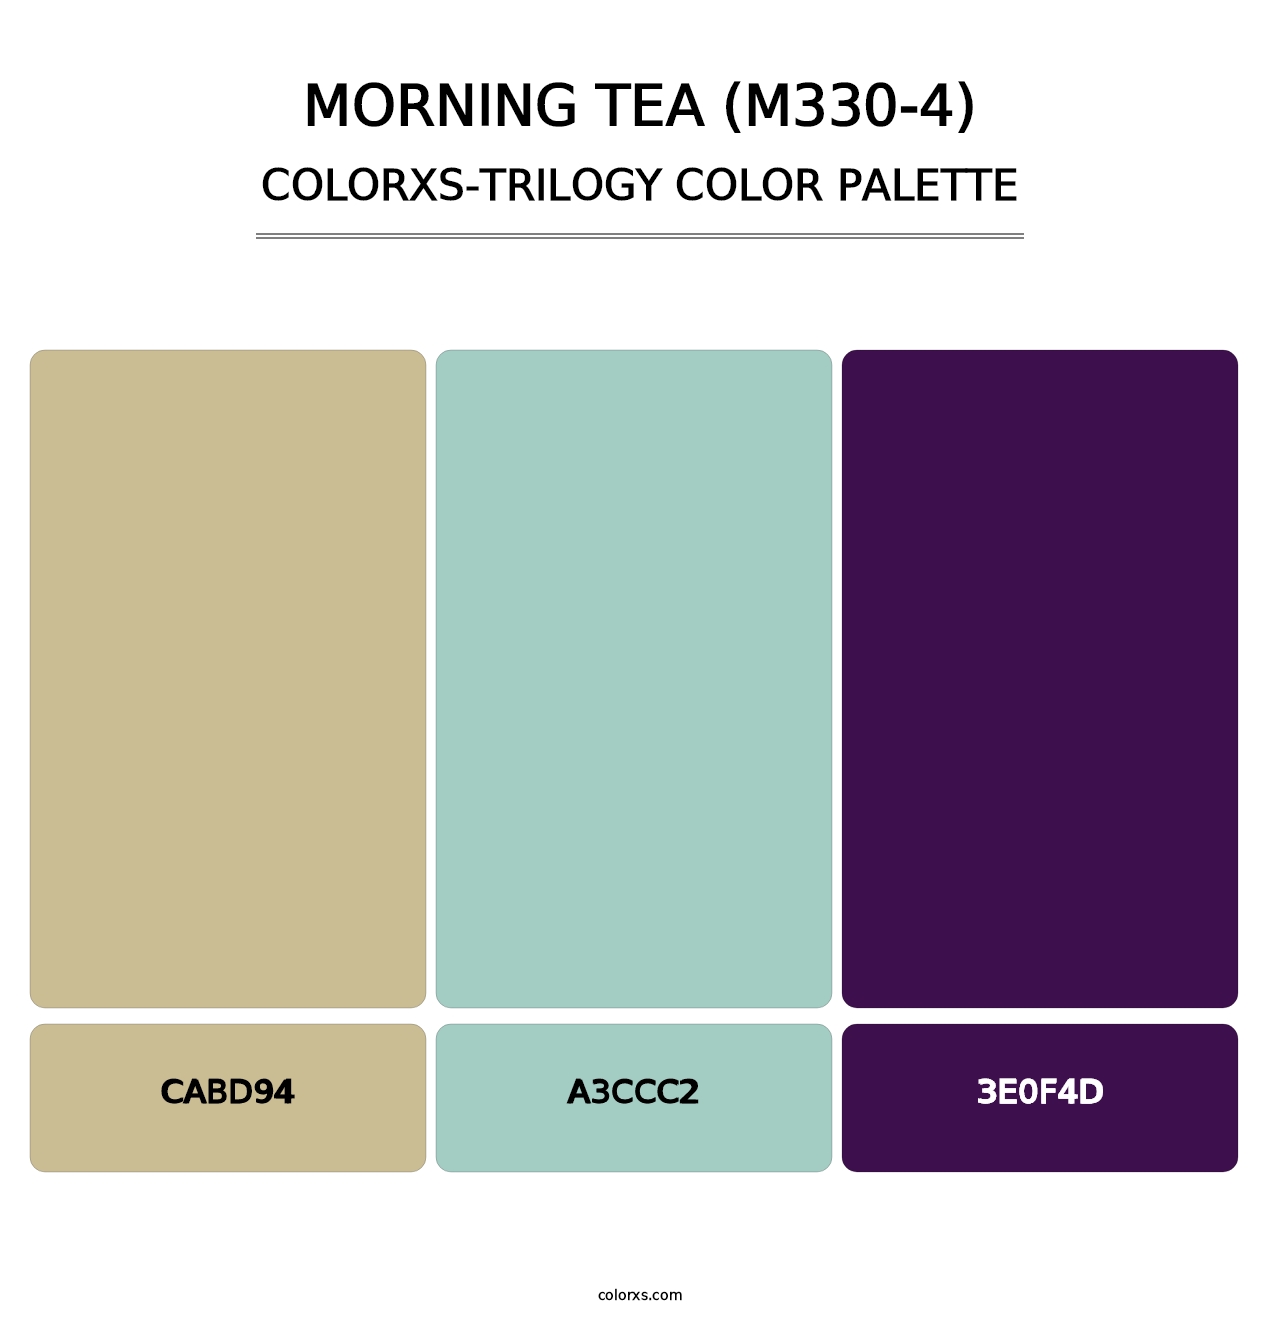 Morning Tea (M330-4) - Colorxs Trilogy Palette